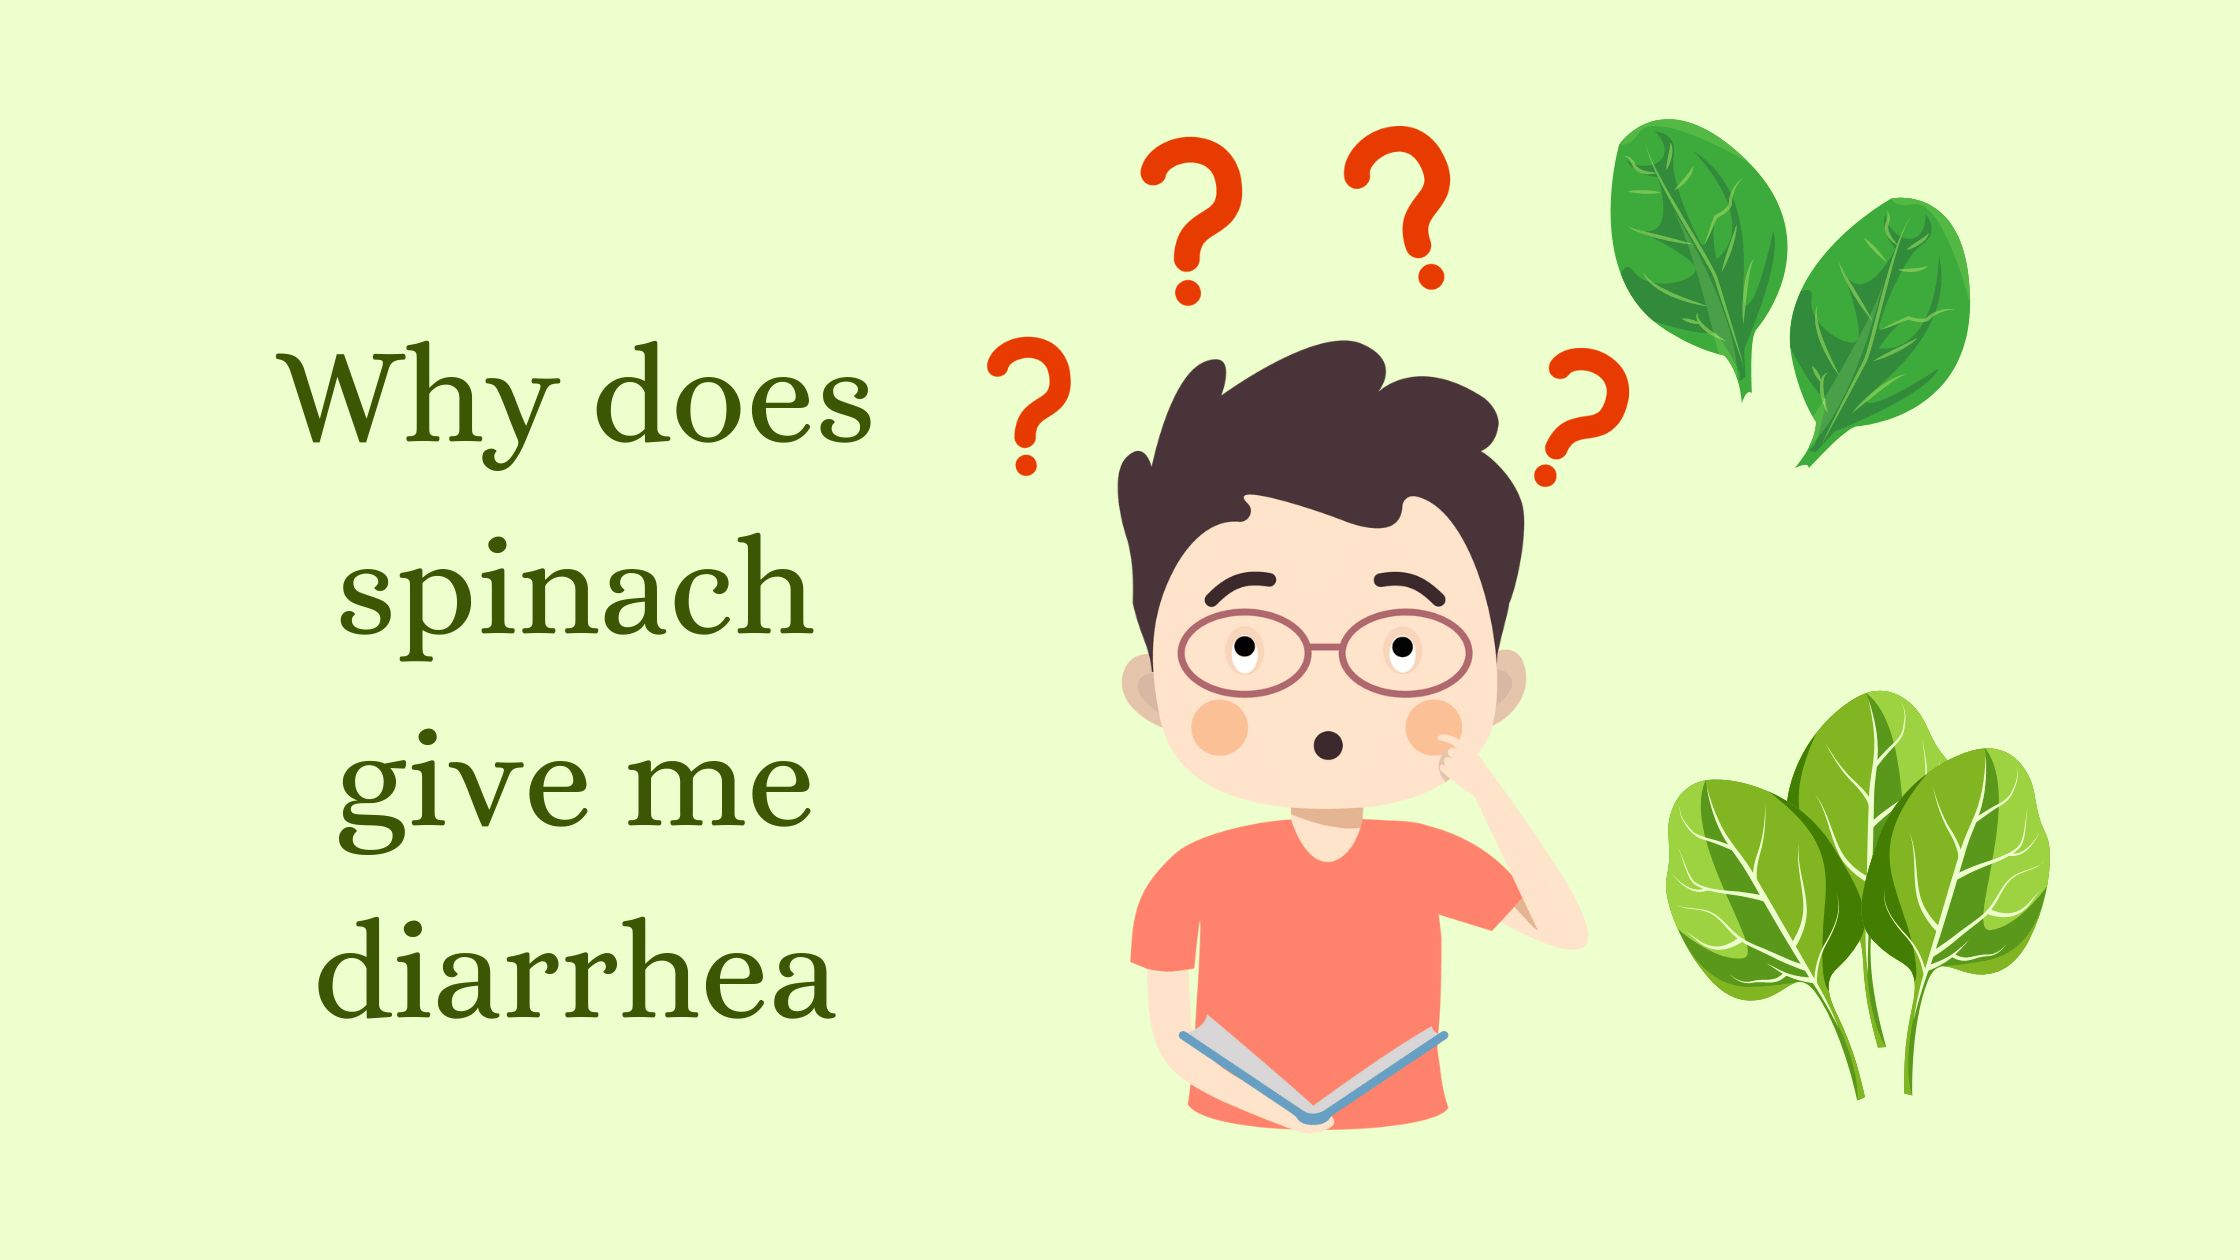 spinach give me diarrhea